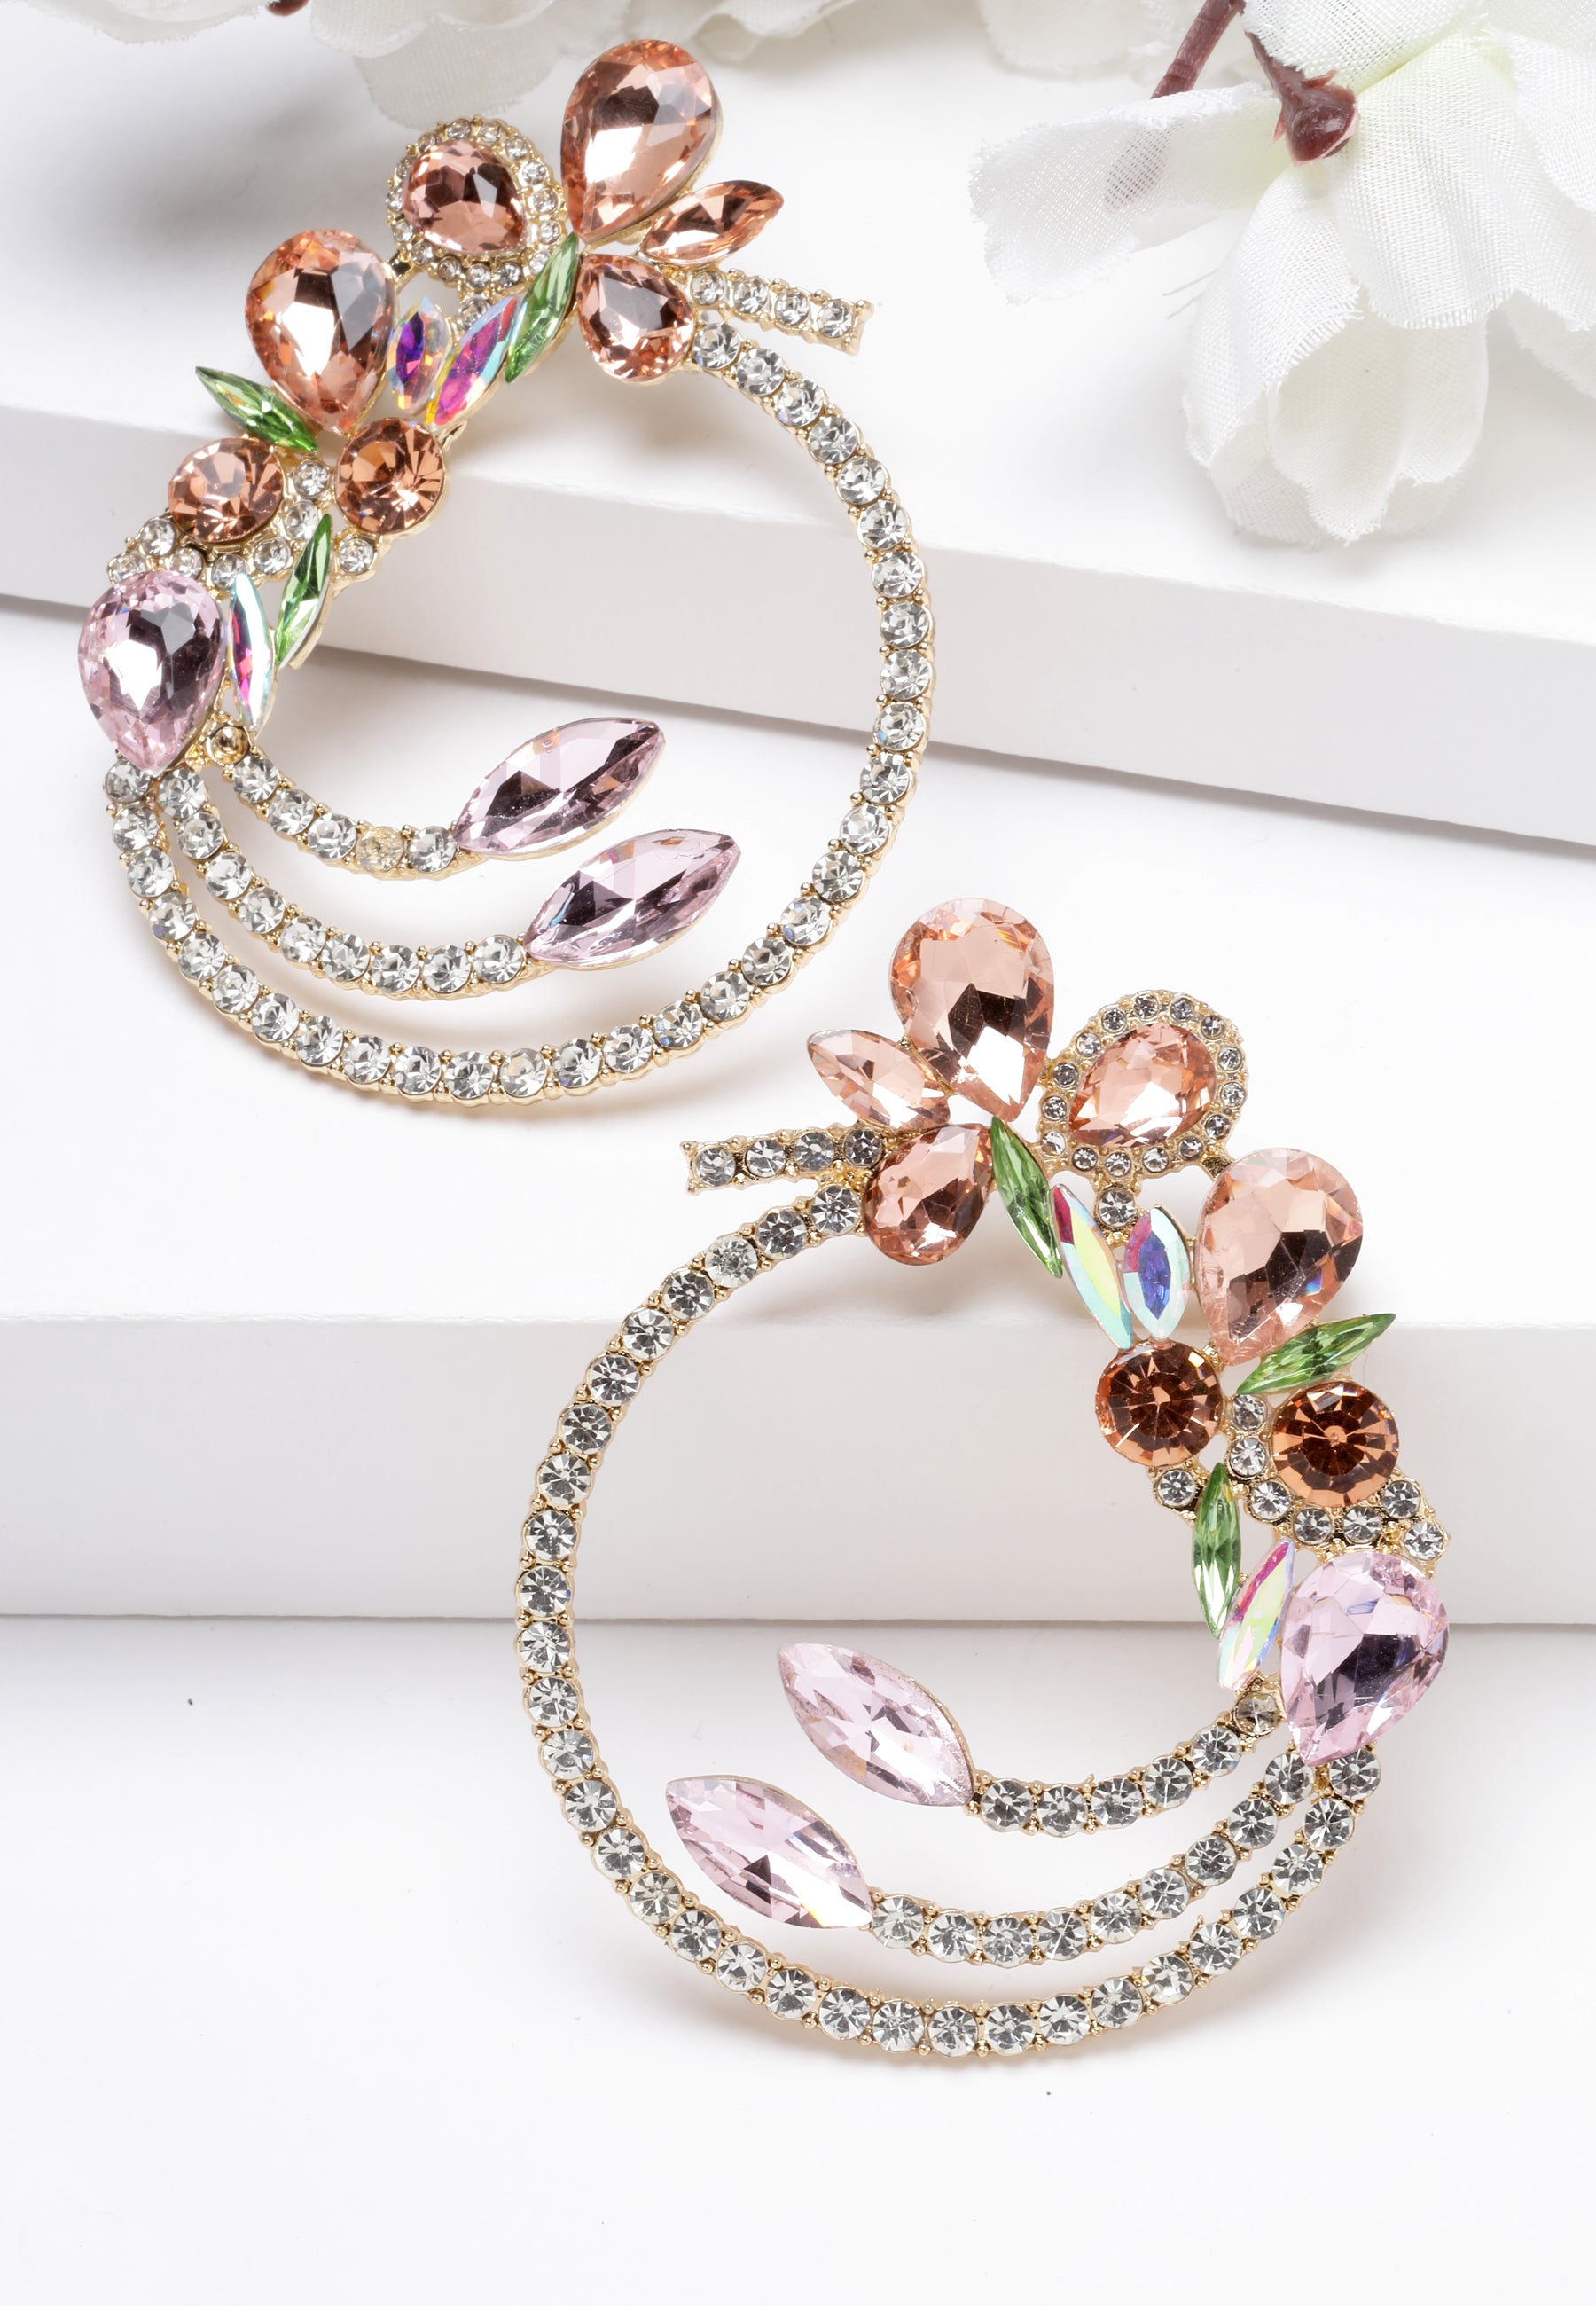 Multi-Layer Circle Crystal Earrings In Pink